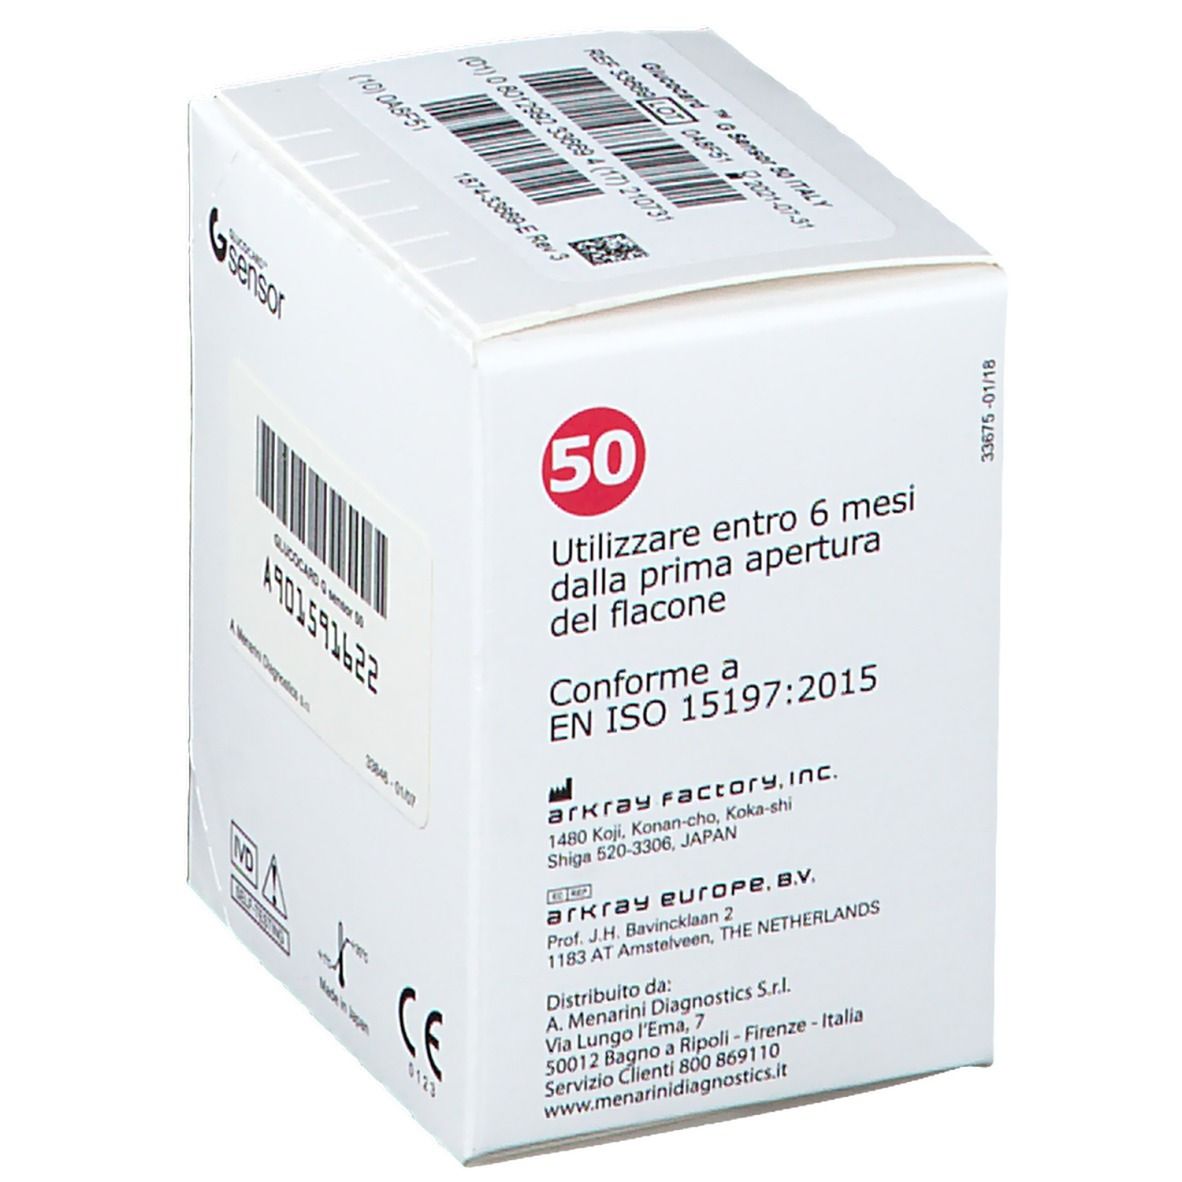 Glucocard™ G Sensor 50 Strisce glicemia